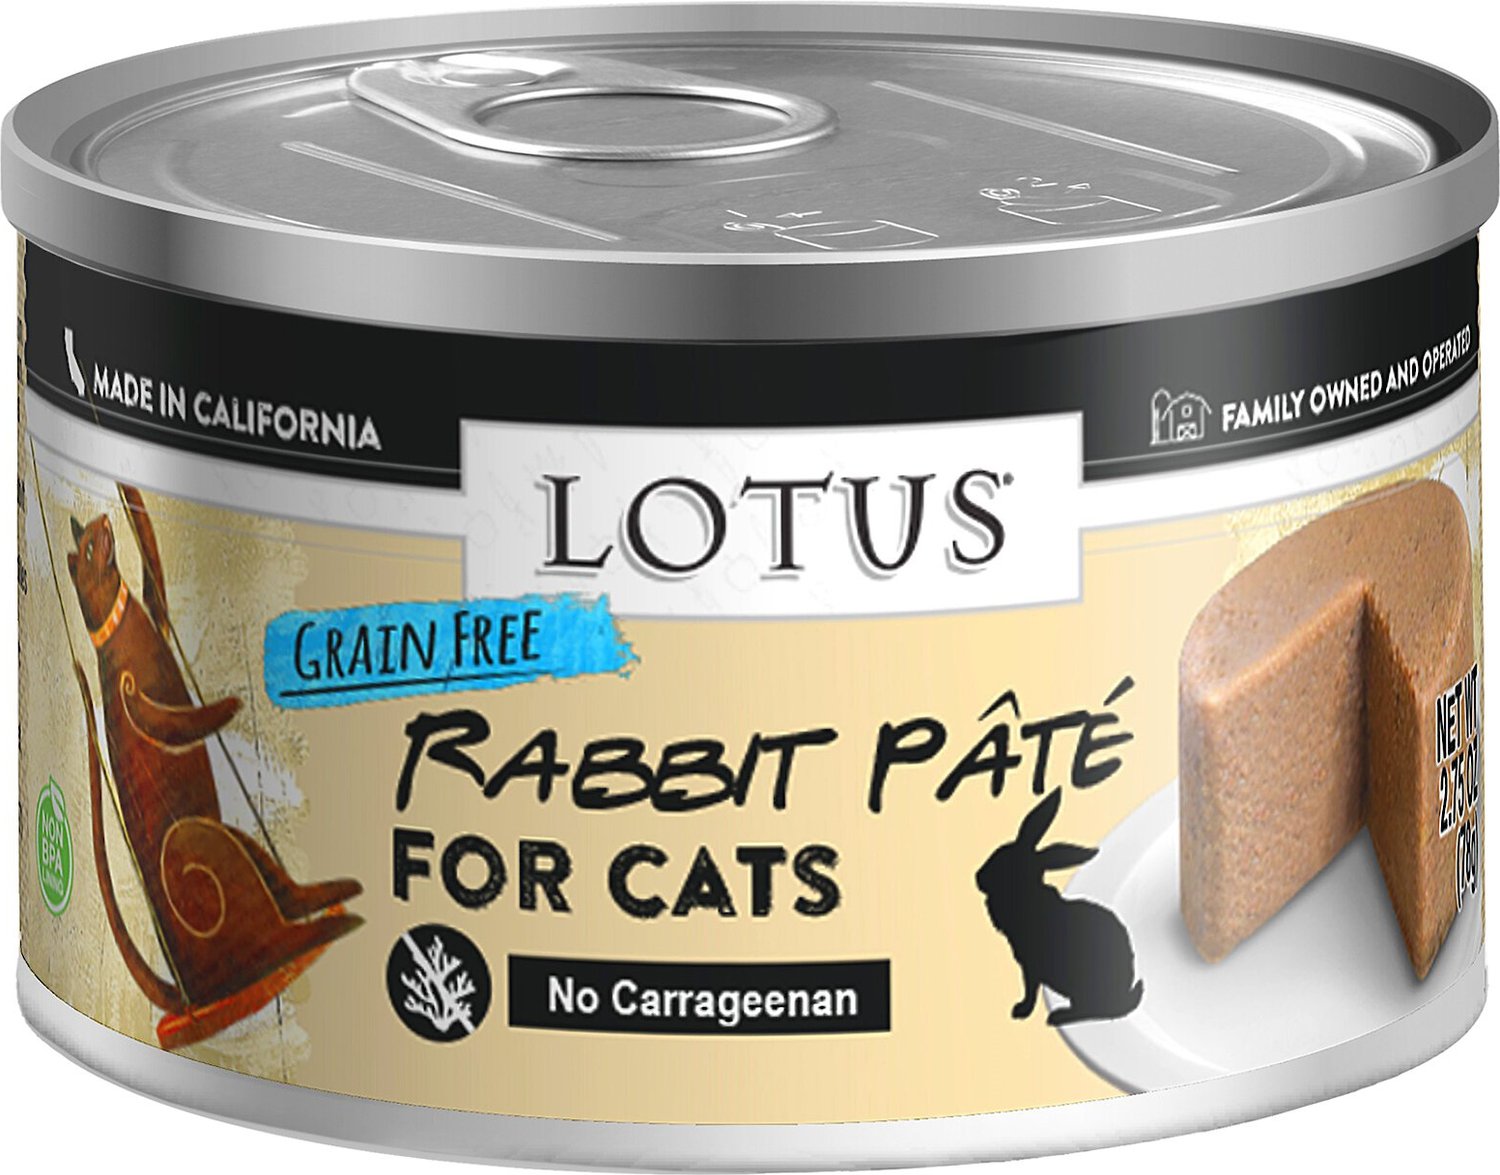 LOTUS Rabbit GrainFree Pate Canned Cat Food, 2.75oz, case of 24